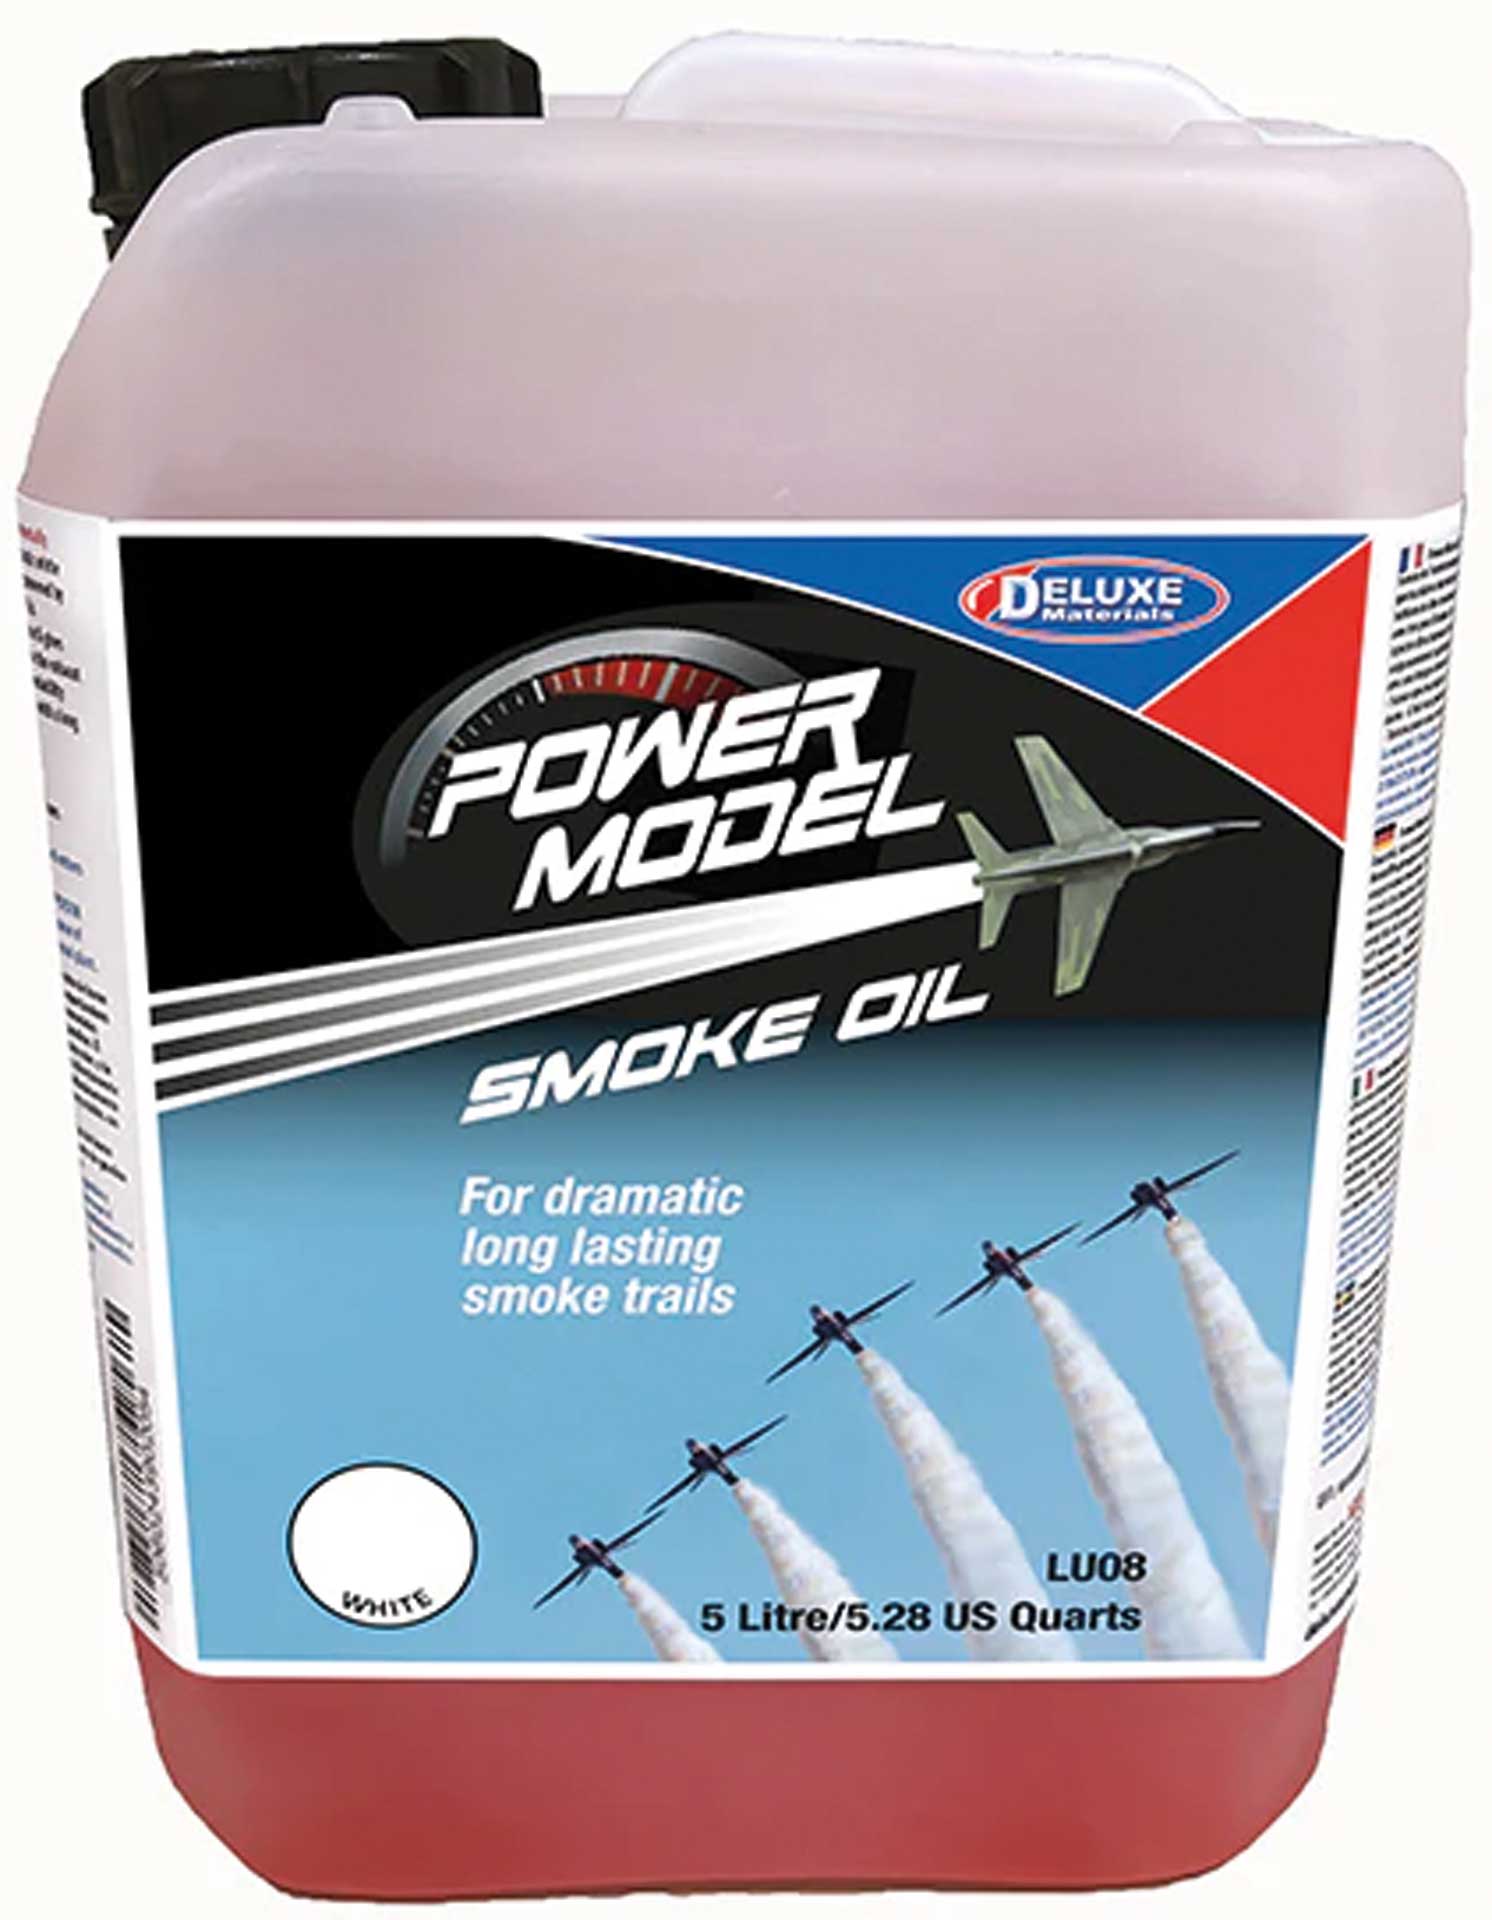 DELUXE PowerModel Smoke Oil 5 Liter